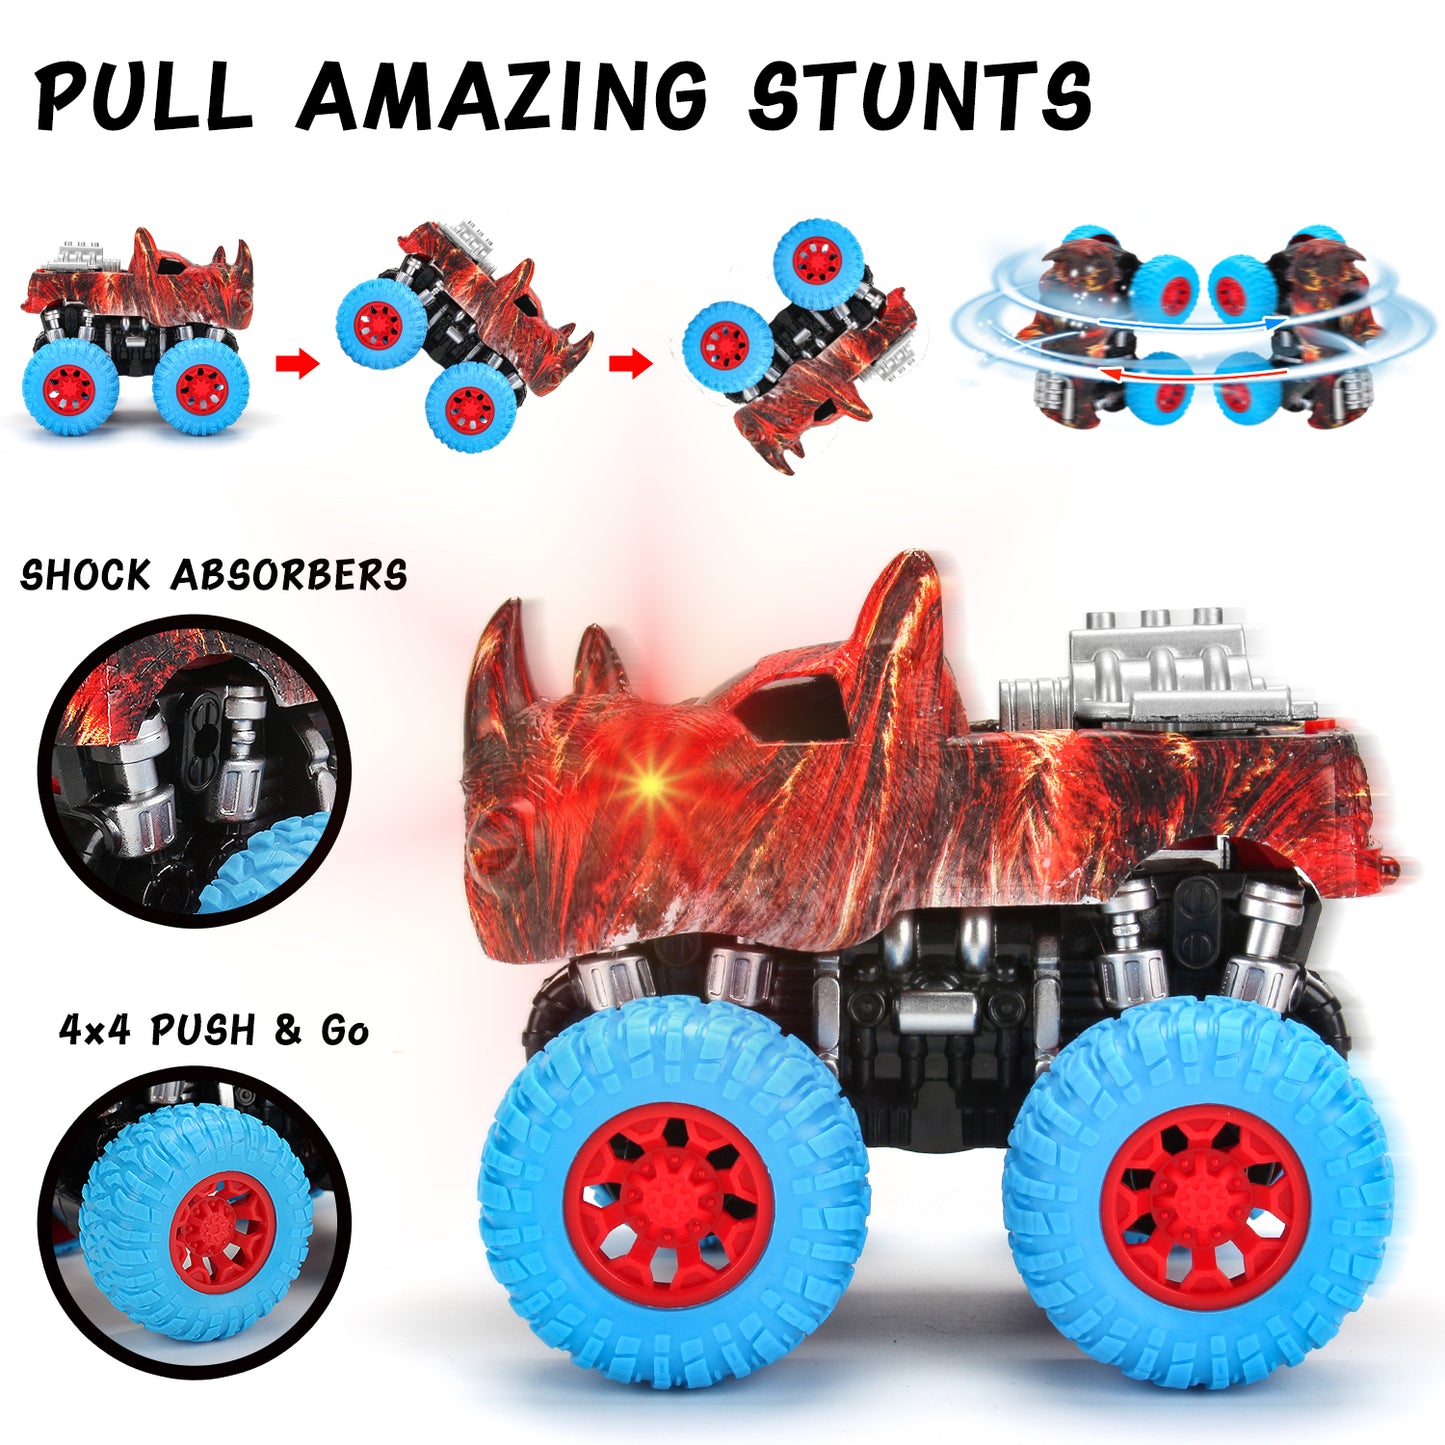 Juego de juguetes Monster Truck - 2 camiones + 2 animales de juguete